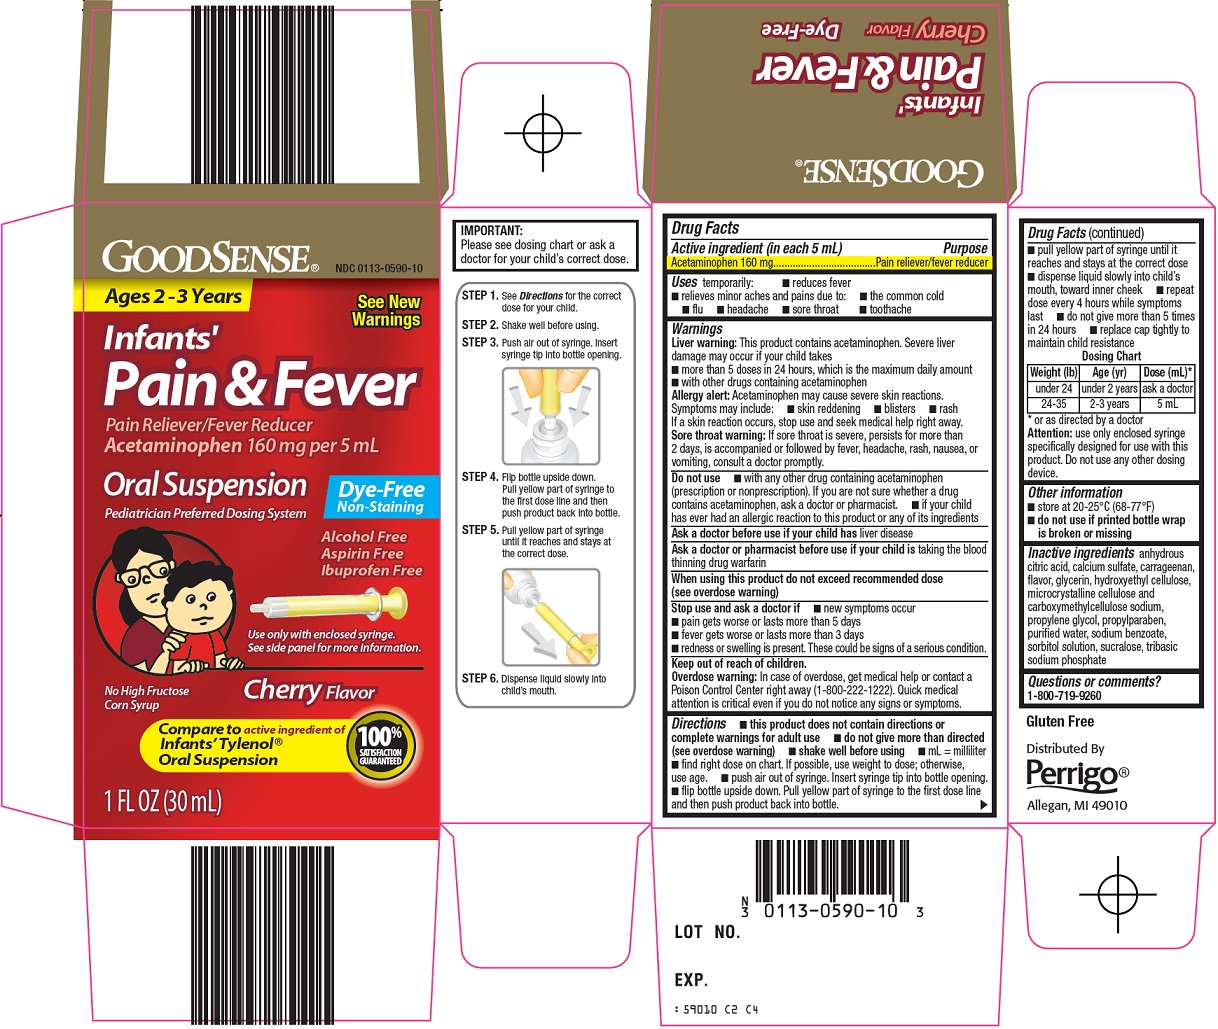 Good Sense Infants' Pain & Fever Carton Image